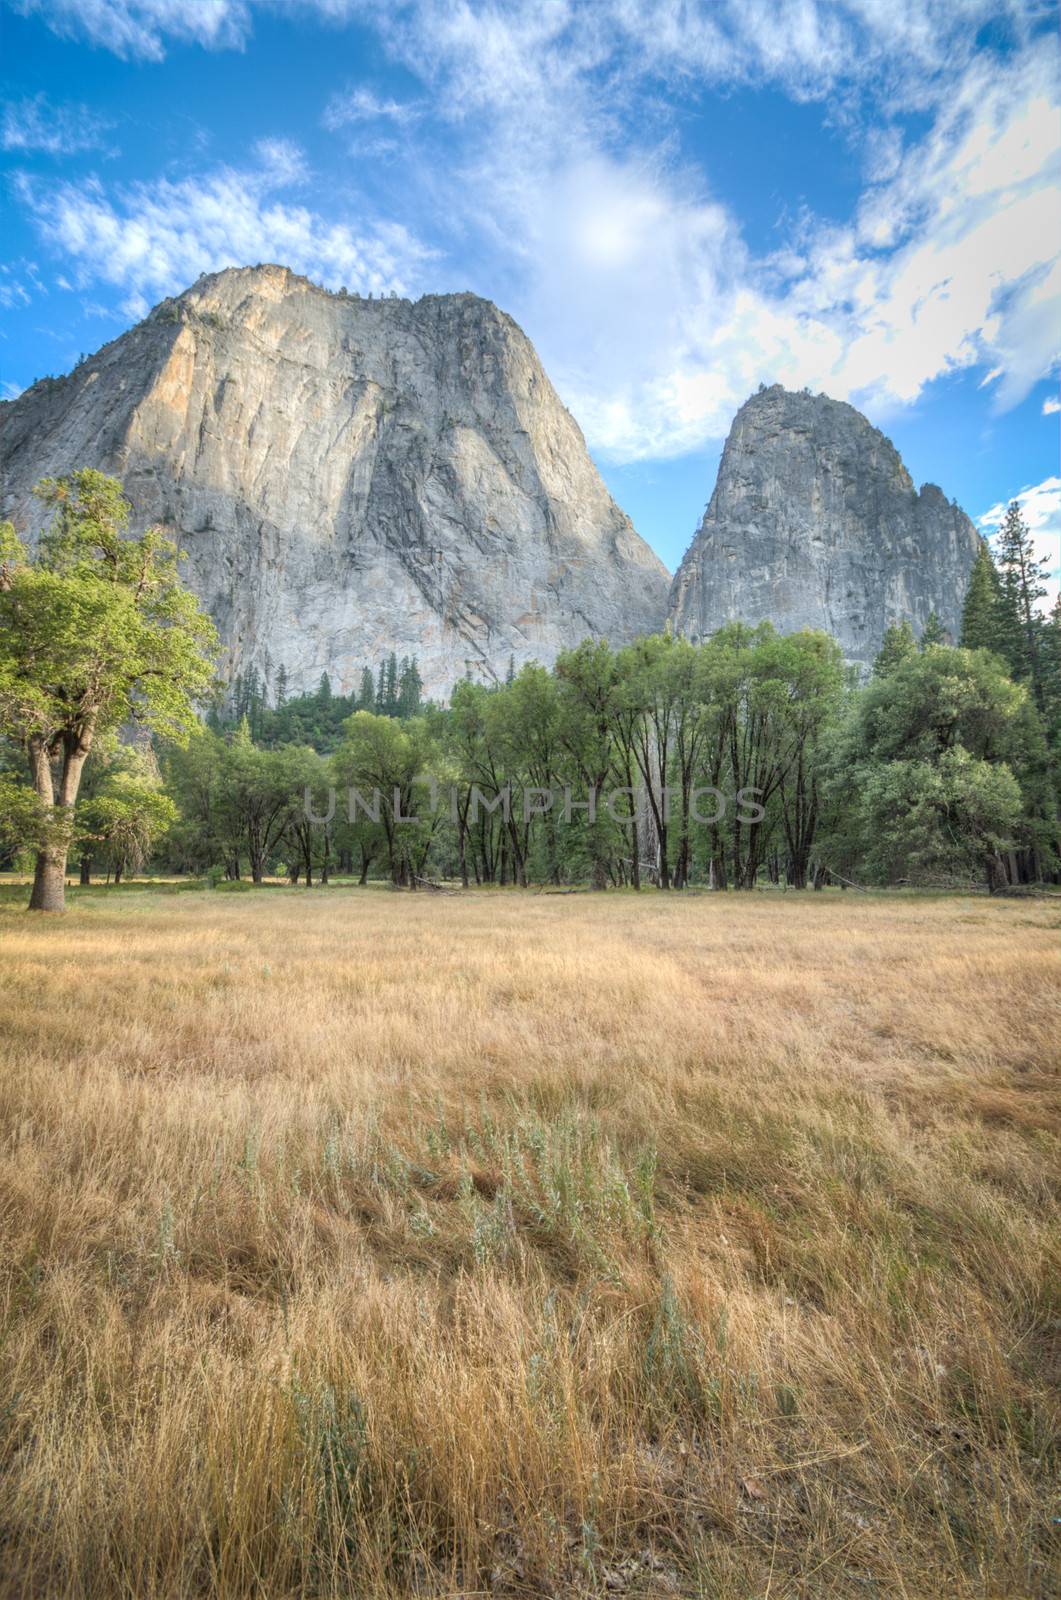 half dome Yosemite national park by weltreisendertj